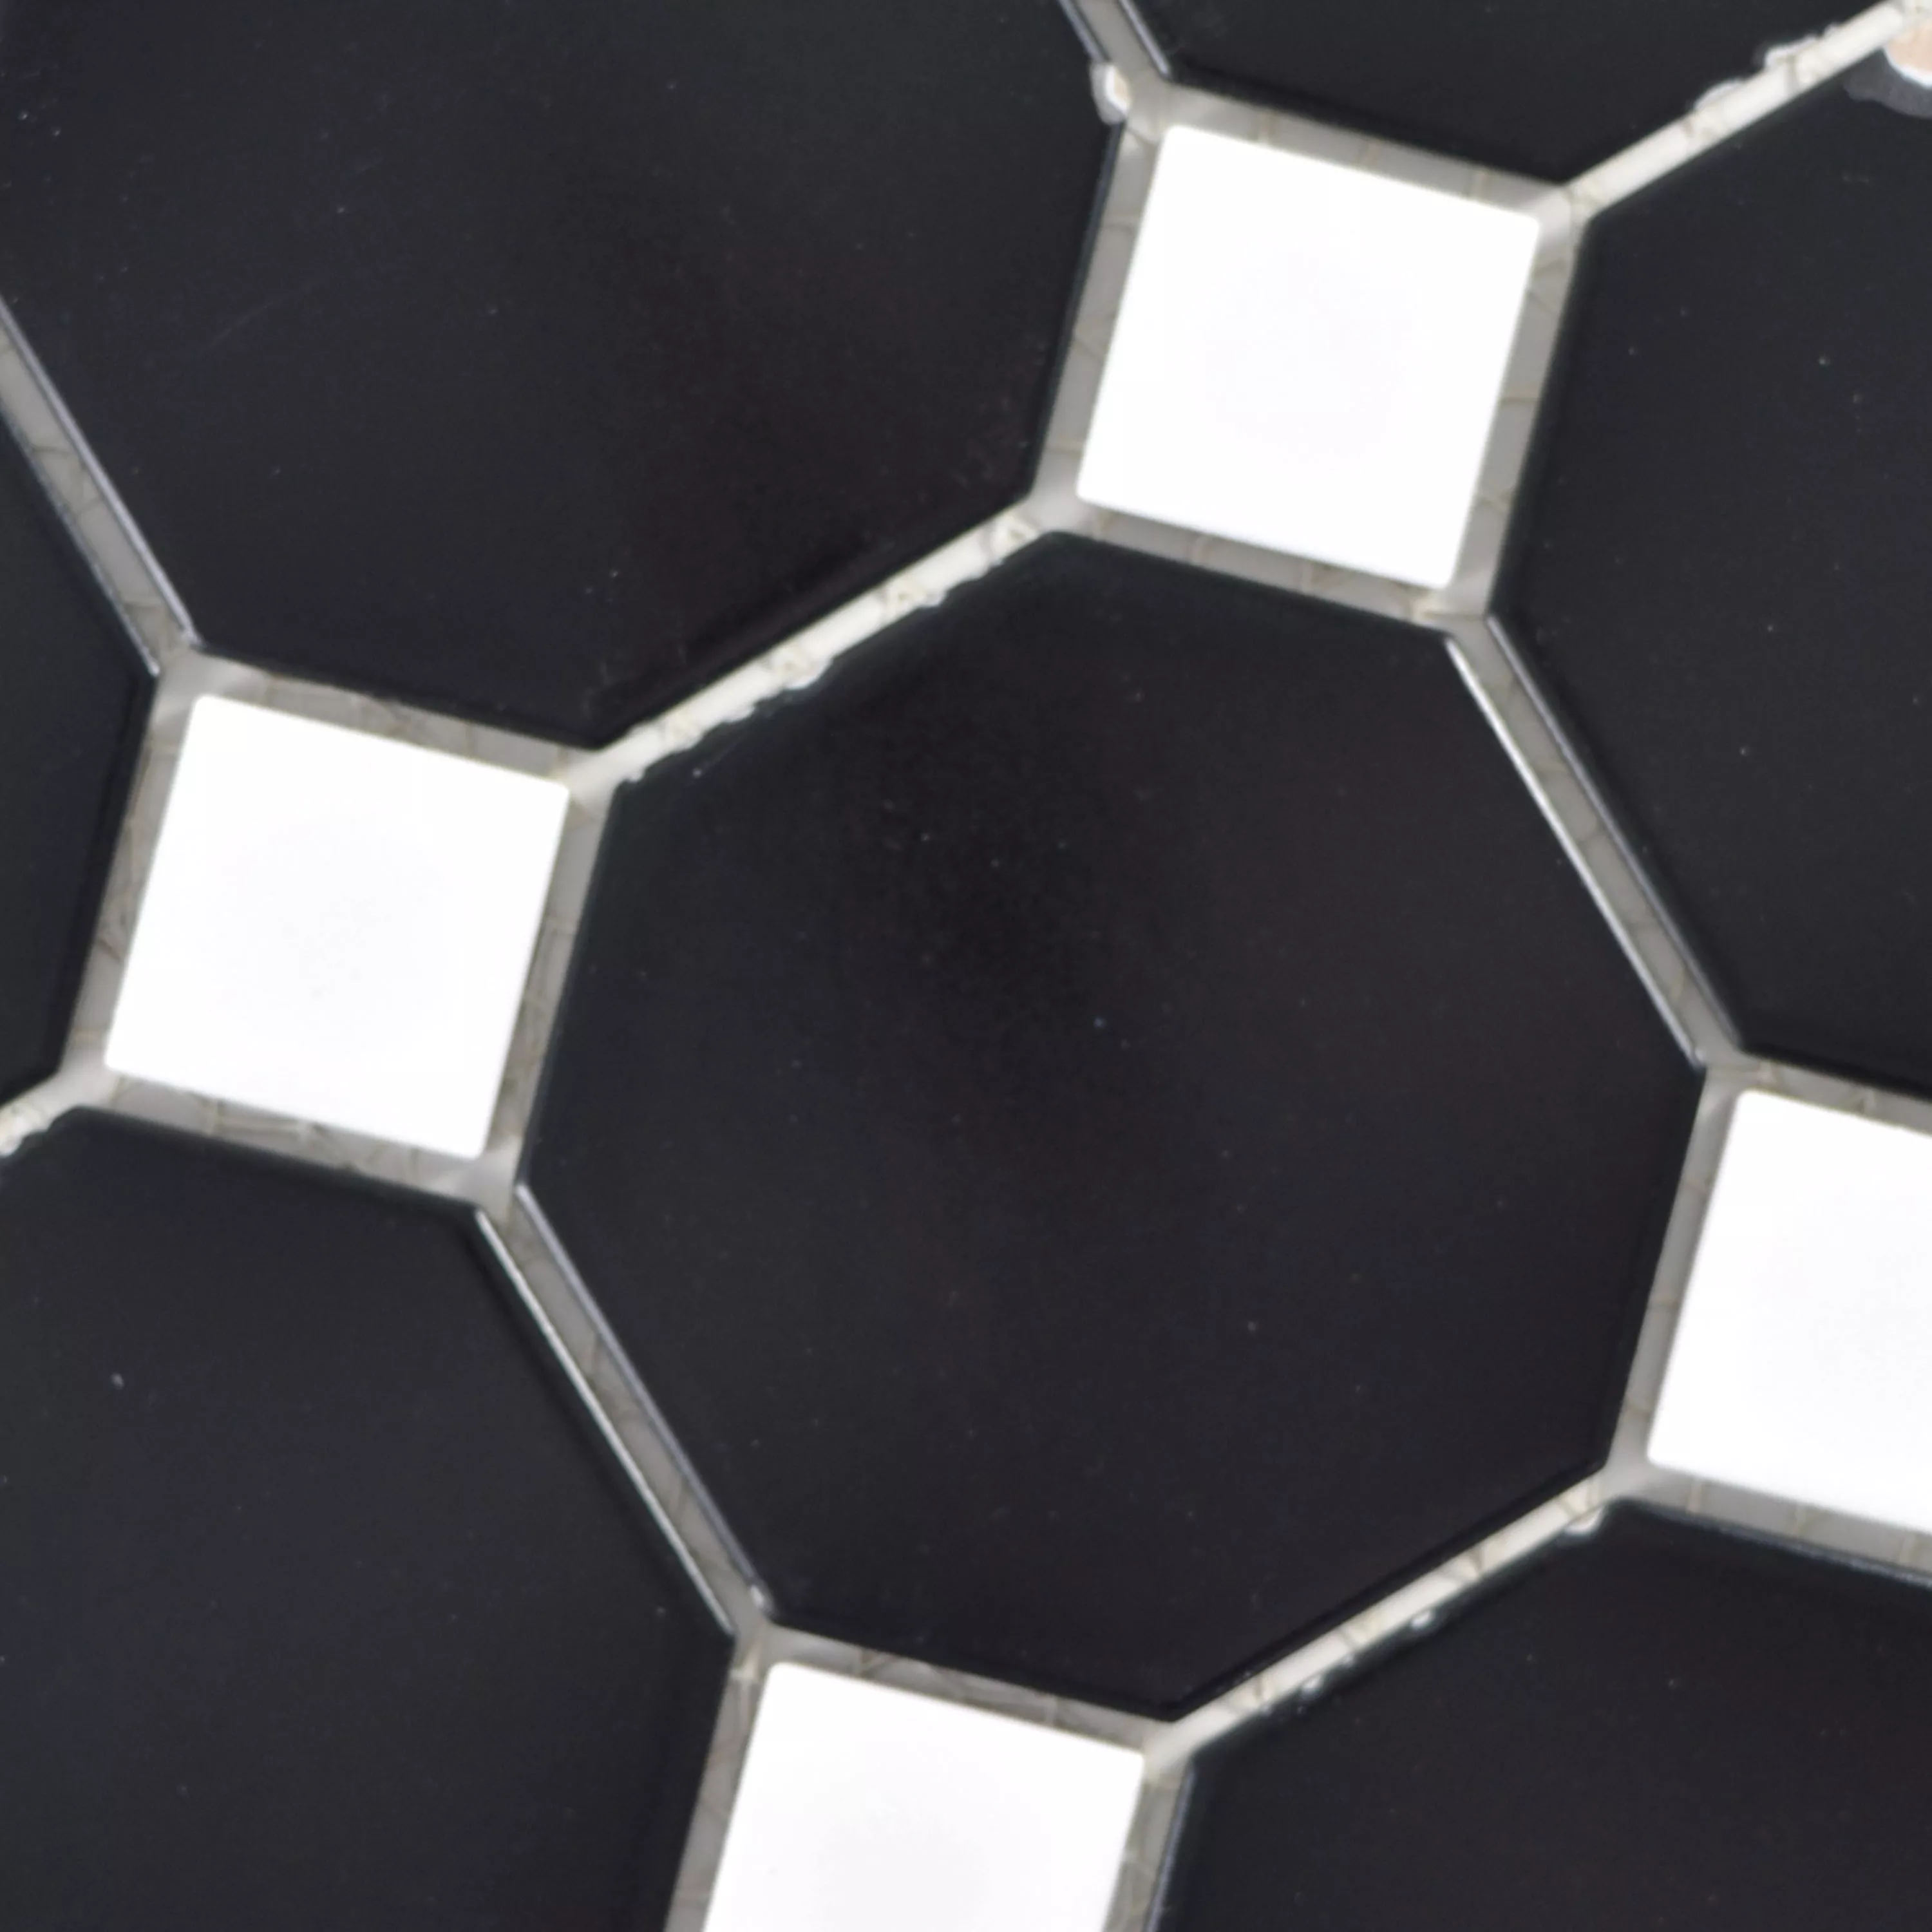 Ceramic Mosaic Tiles Octagon Fürstenberg Black Blanc